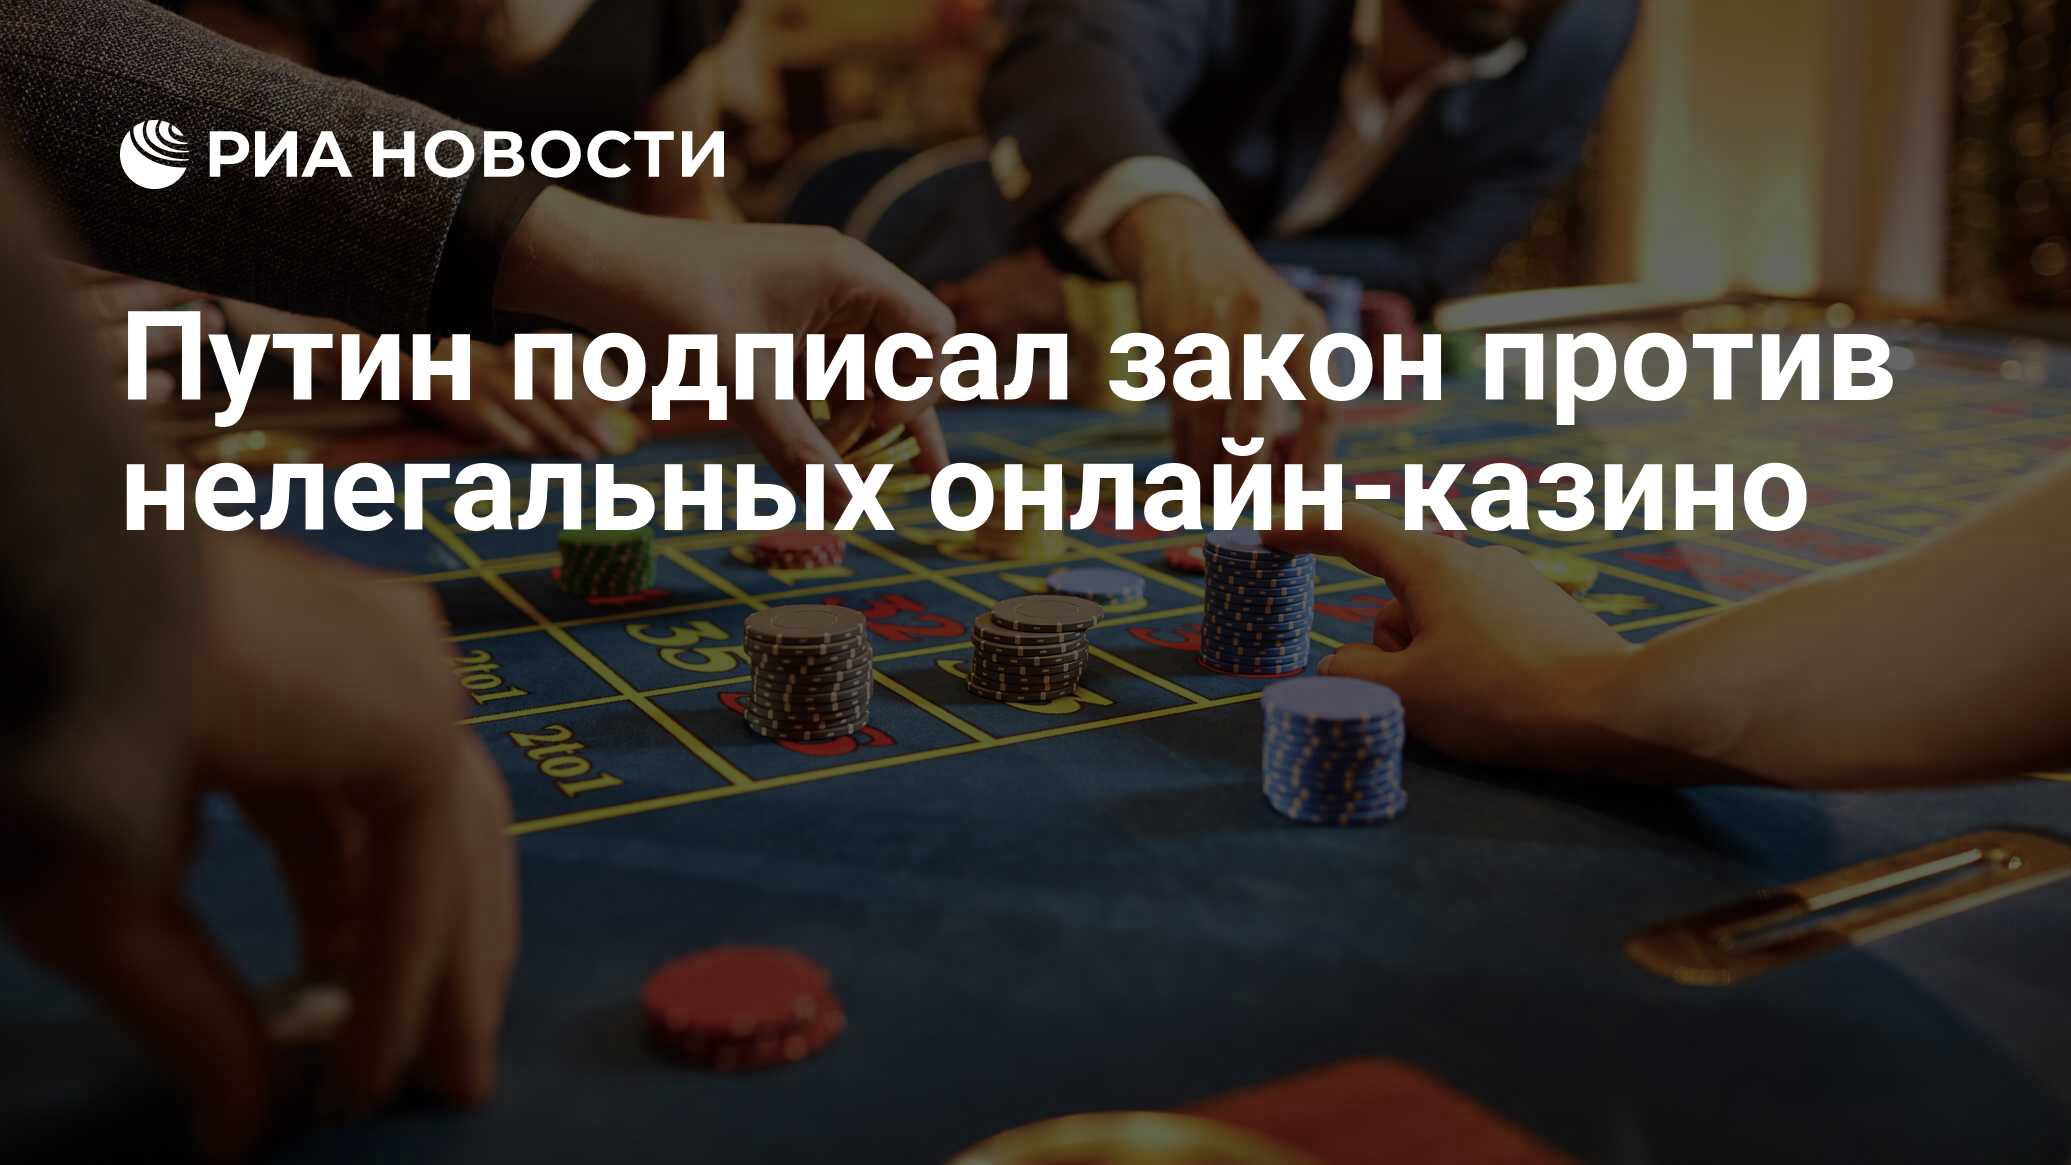 Закон онлайн казино рф бездепозитный бонус казино вебмани